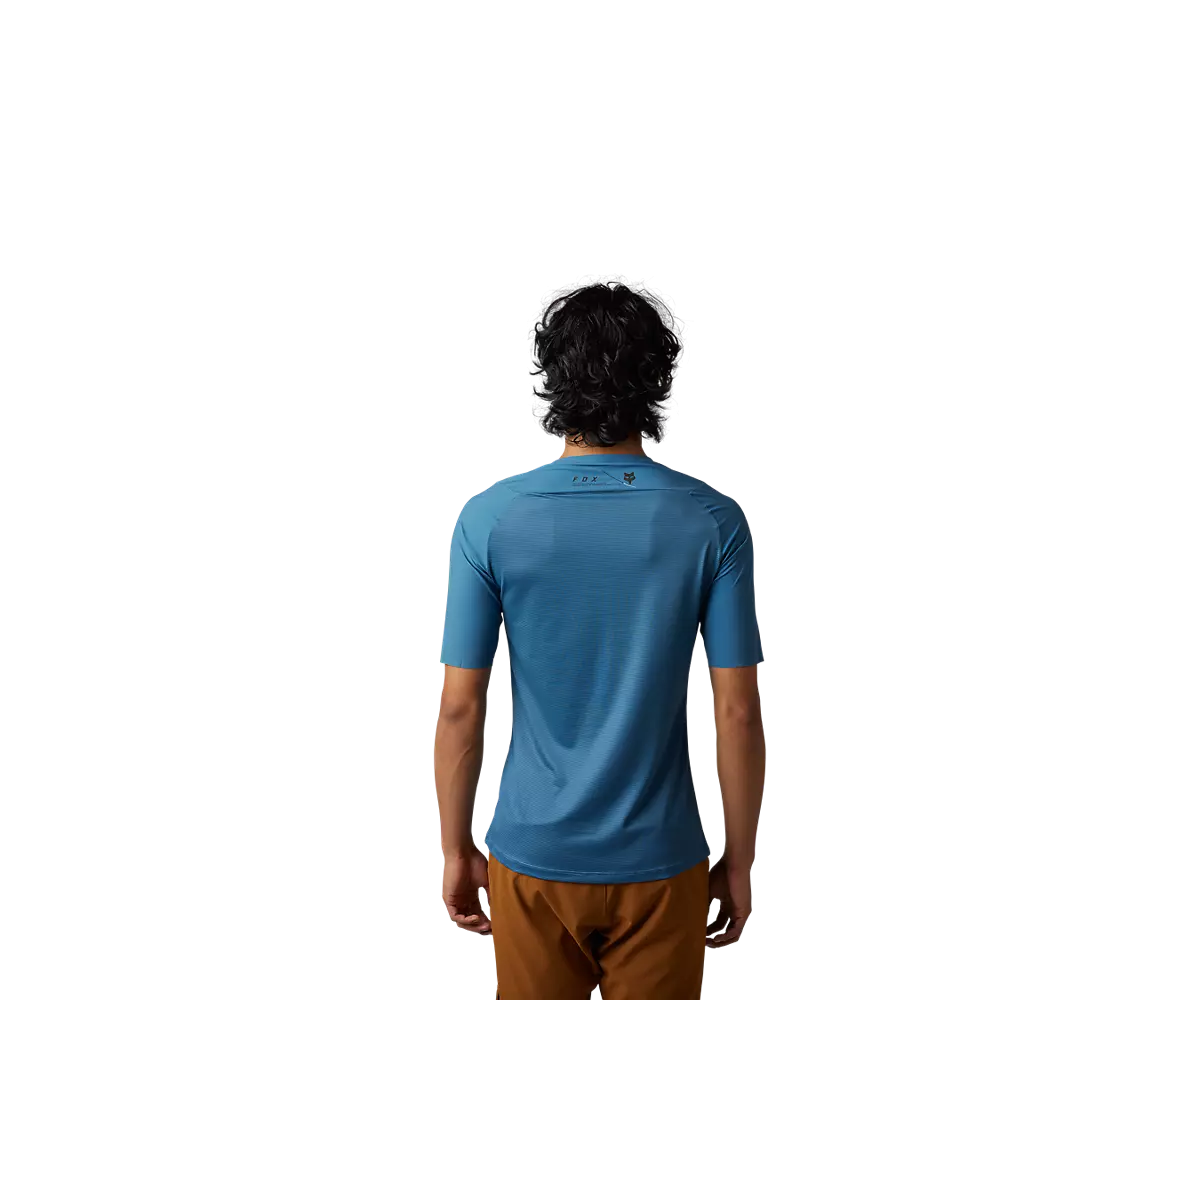 espalda de la Camiseta manga corta Fox FLEXAIR ASCENT entallada en color azul para XC, Gravel o downcountry 28868-207